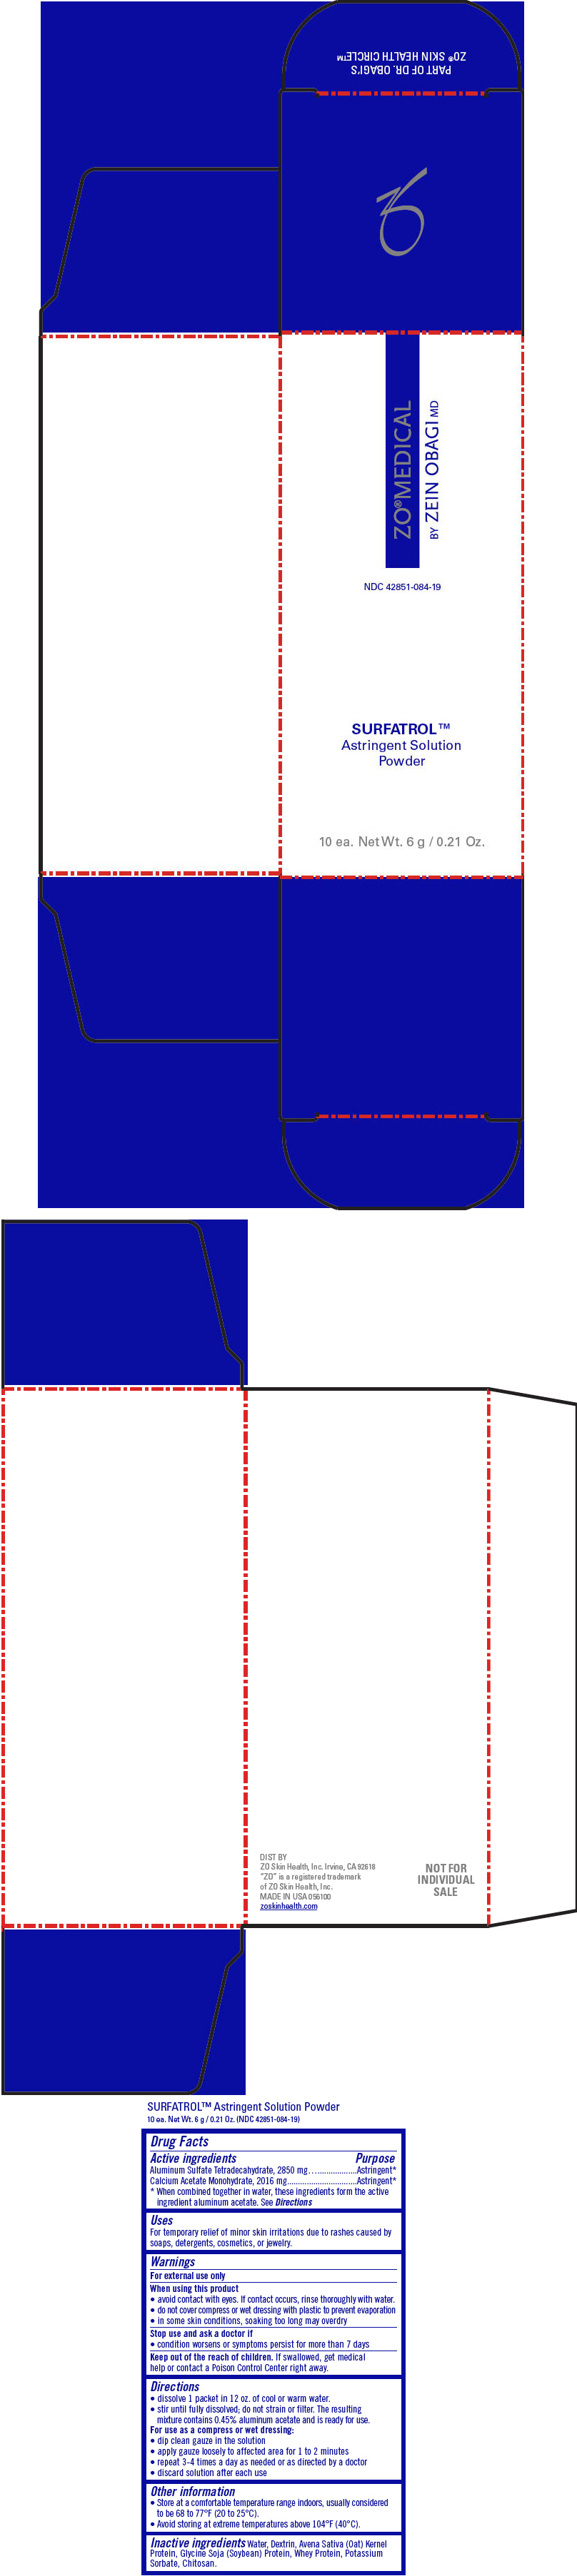 PRINCIPAL DISPLAY PANEL - 6 g Packet Carton